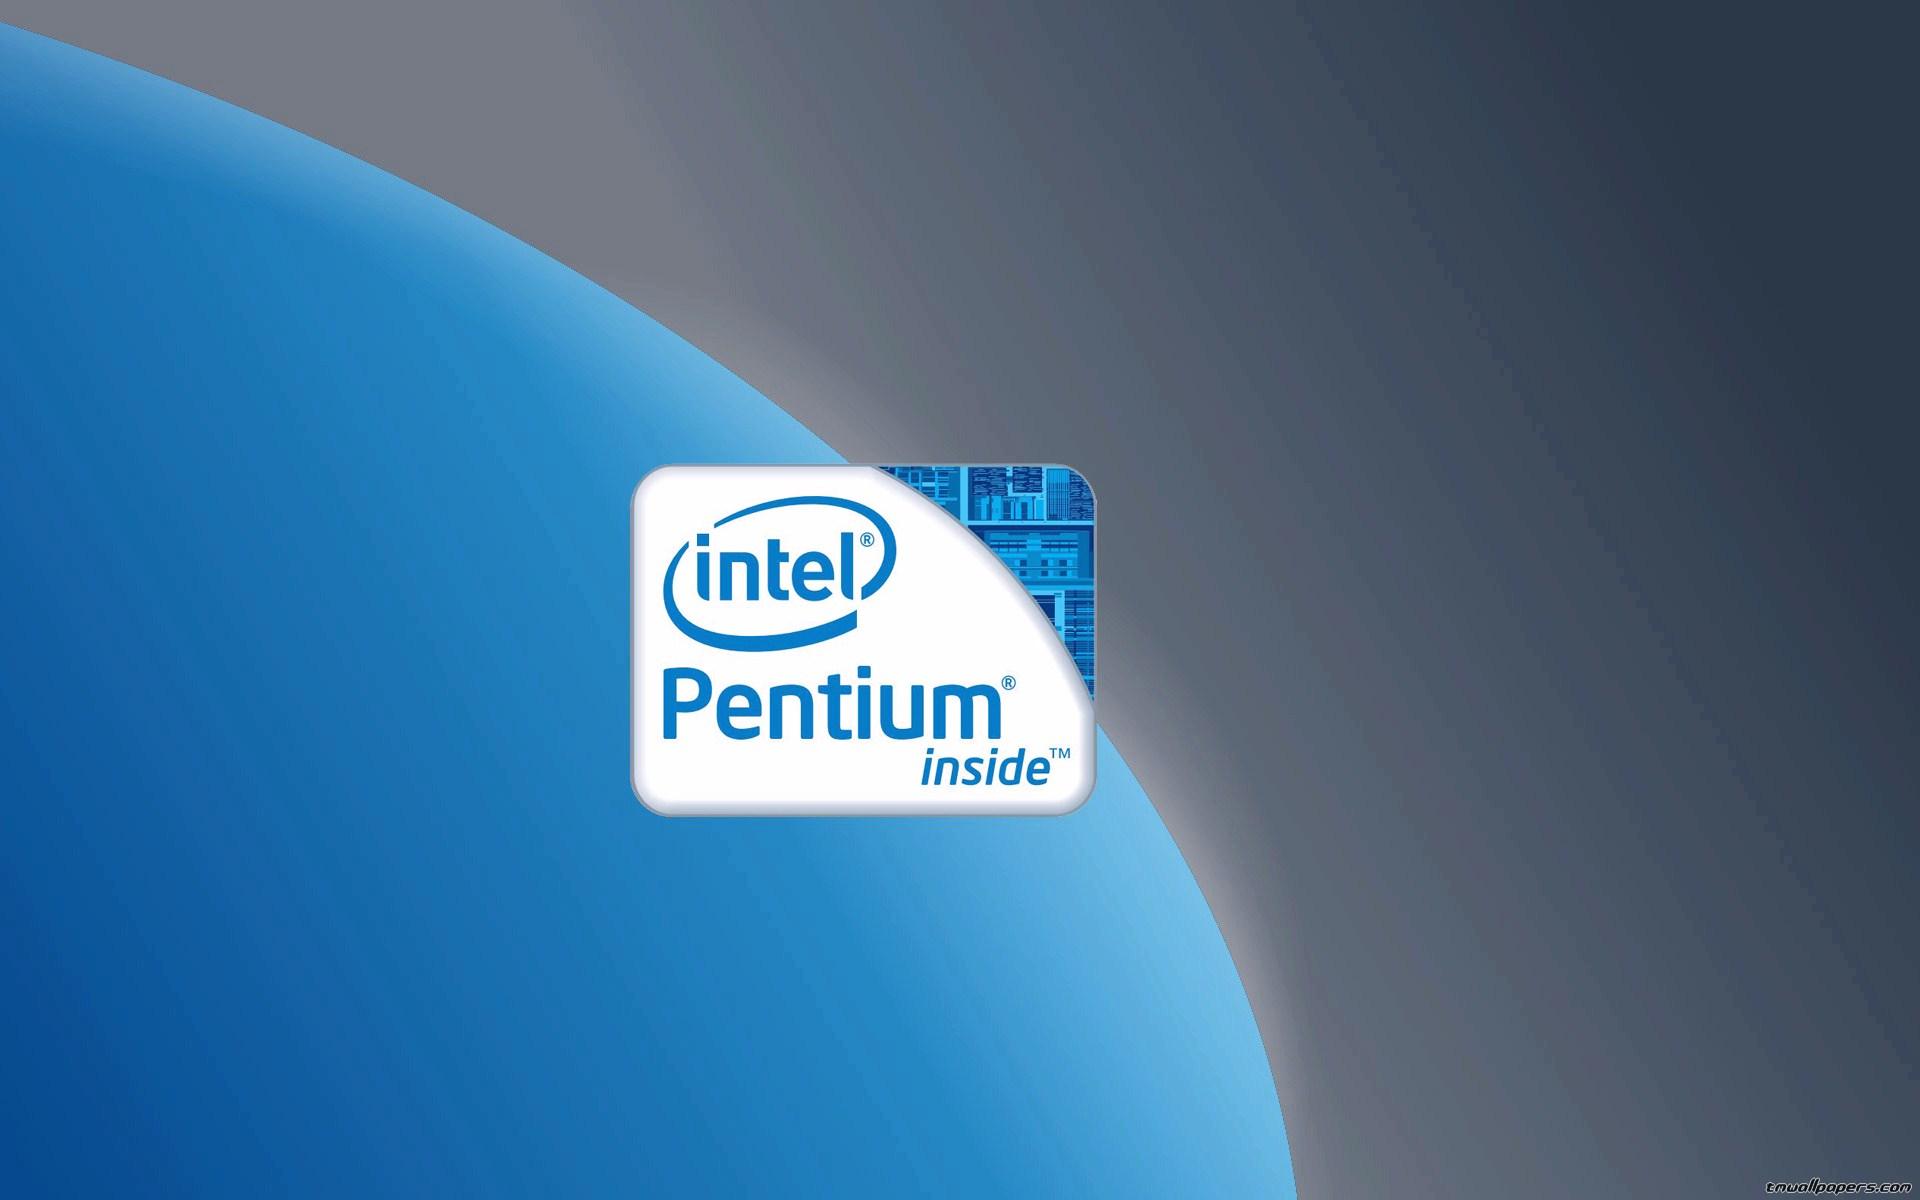 Reg intel. Интел. Интел пентиум инсайд. Intel Pentium inside. Логотип Intel inside.